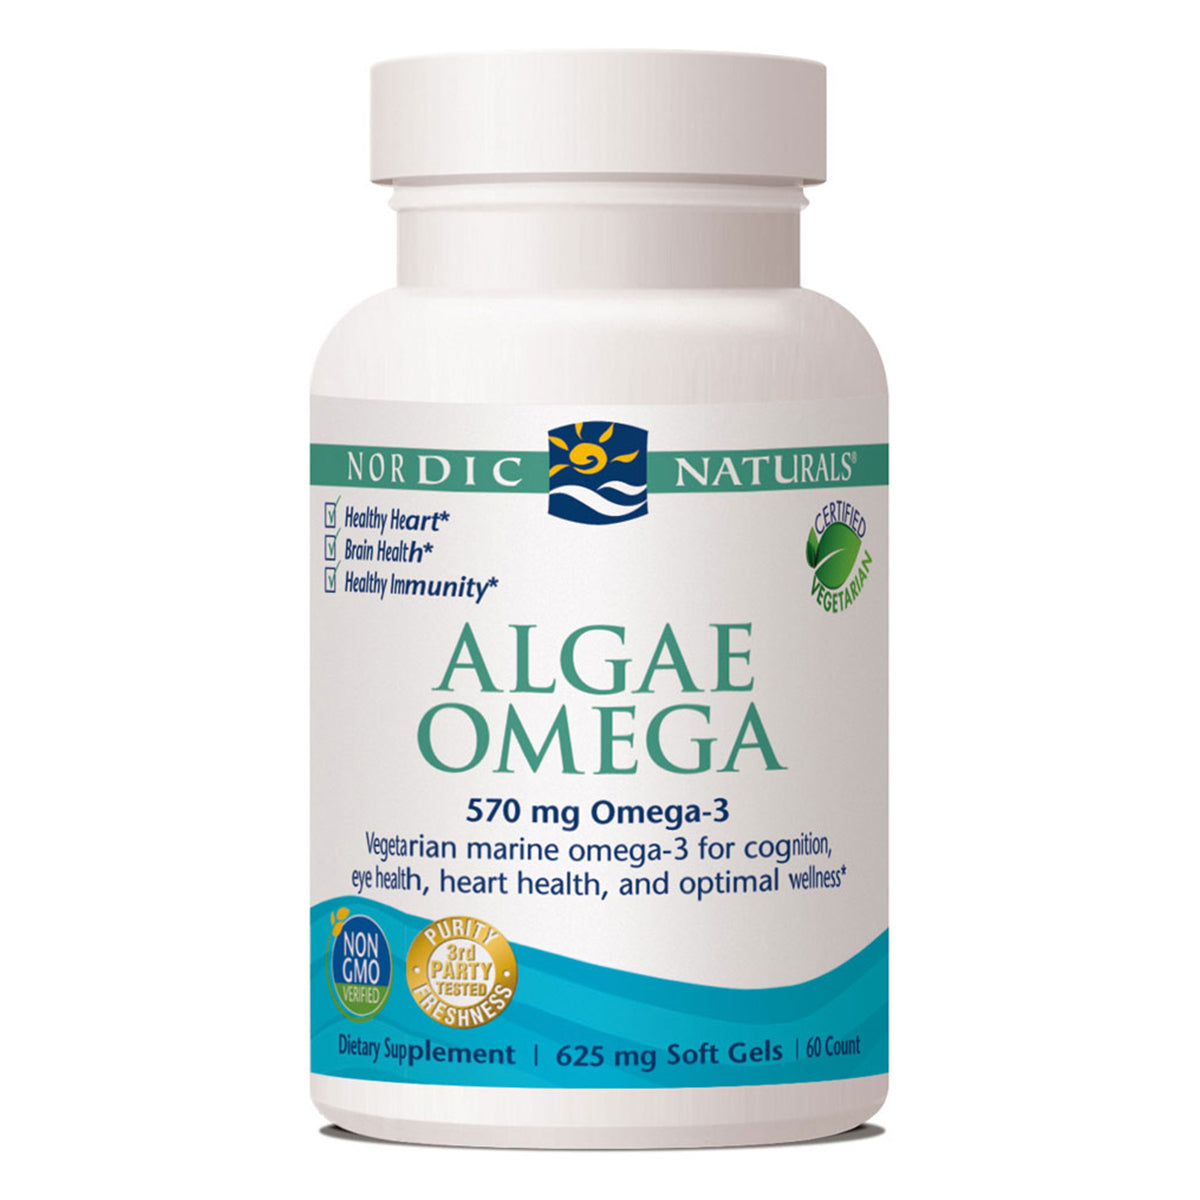 Primary image of Algae Omega